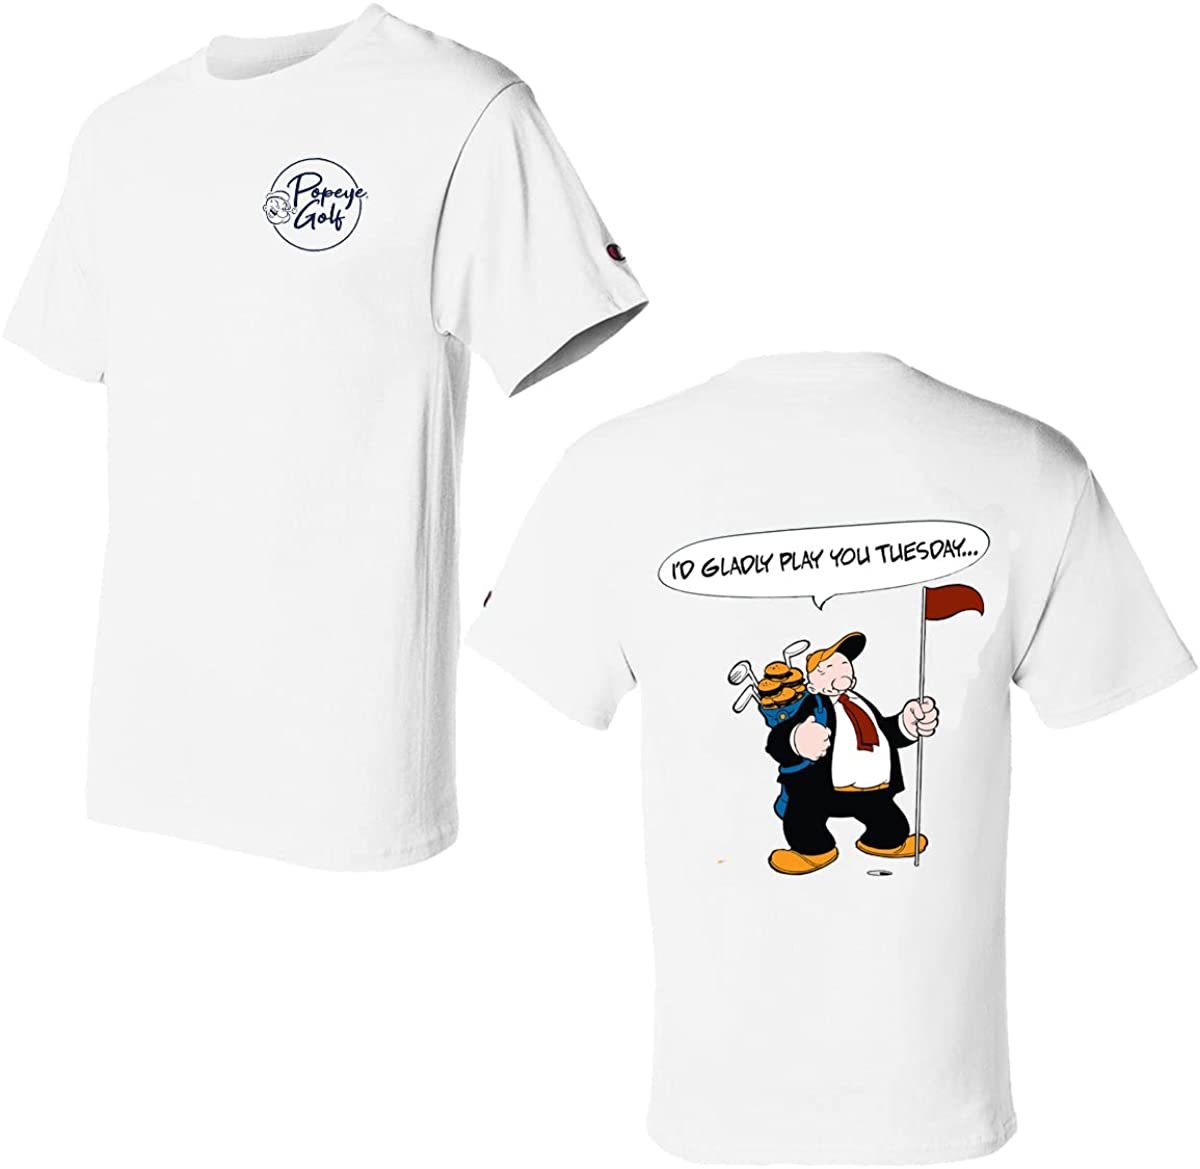 Popeye Wimpy Golf Men's I'd Gladly Play You Tuesday Print T-Shirt